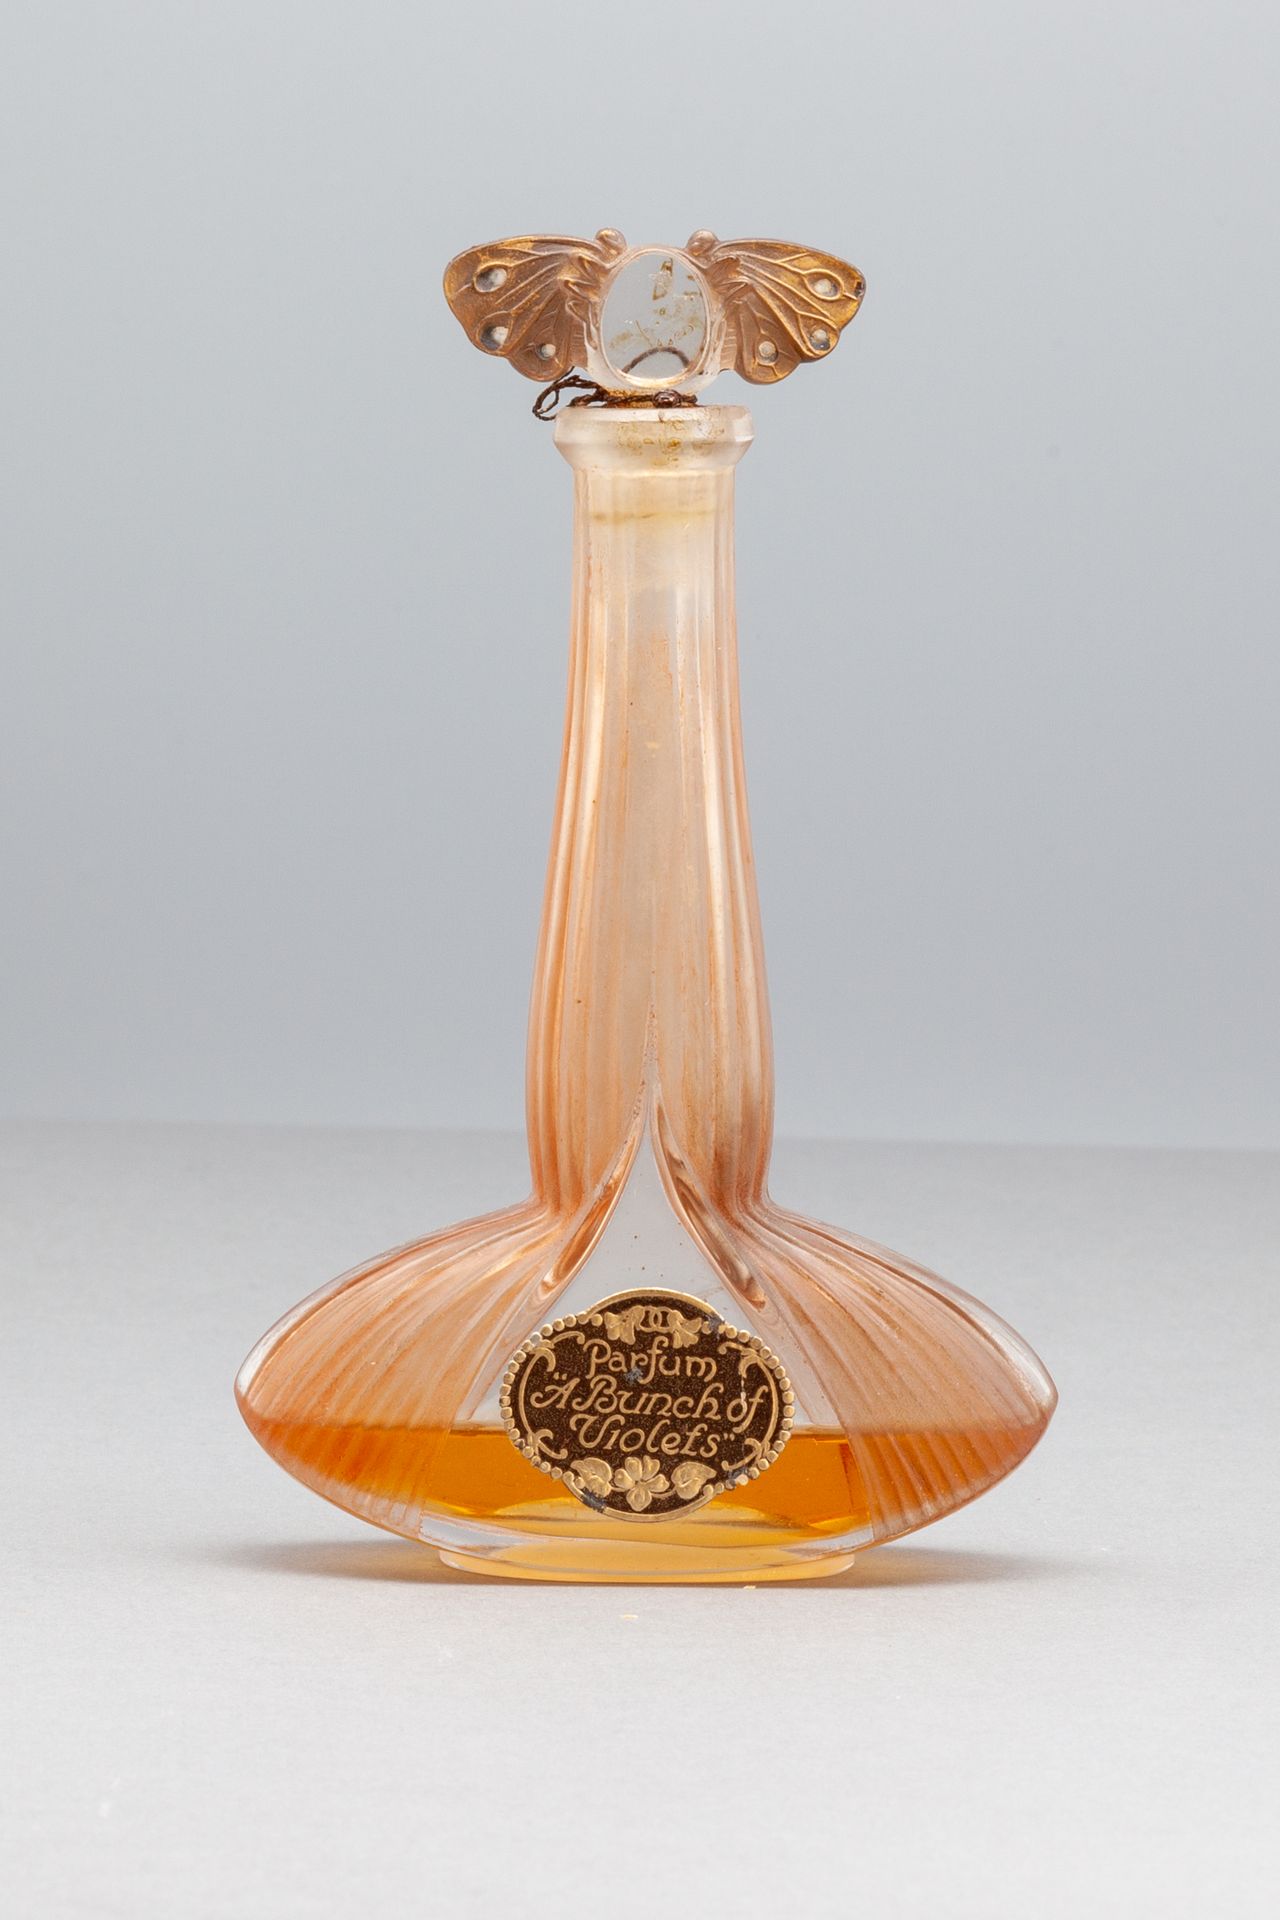 DEPINOIX - PARFUM "A BUNCH OF VIOLETS" 半透明的条纹玻璃瓶。瓶塞上装饰着两只蝴蝶。高14厘米